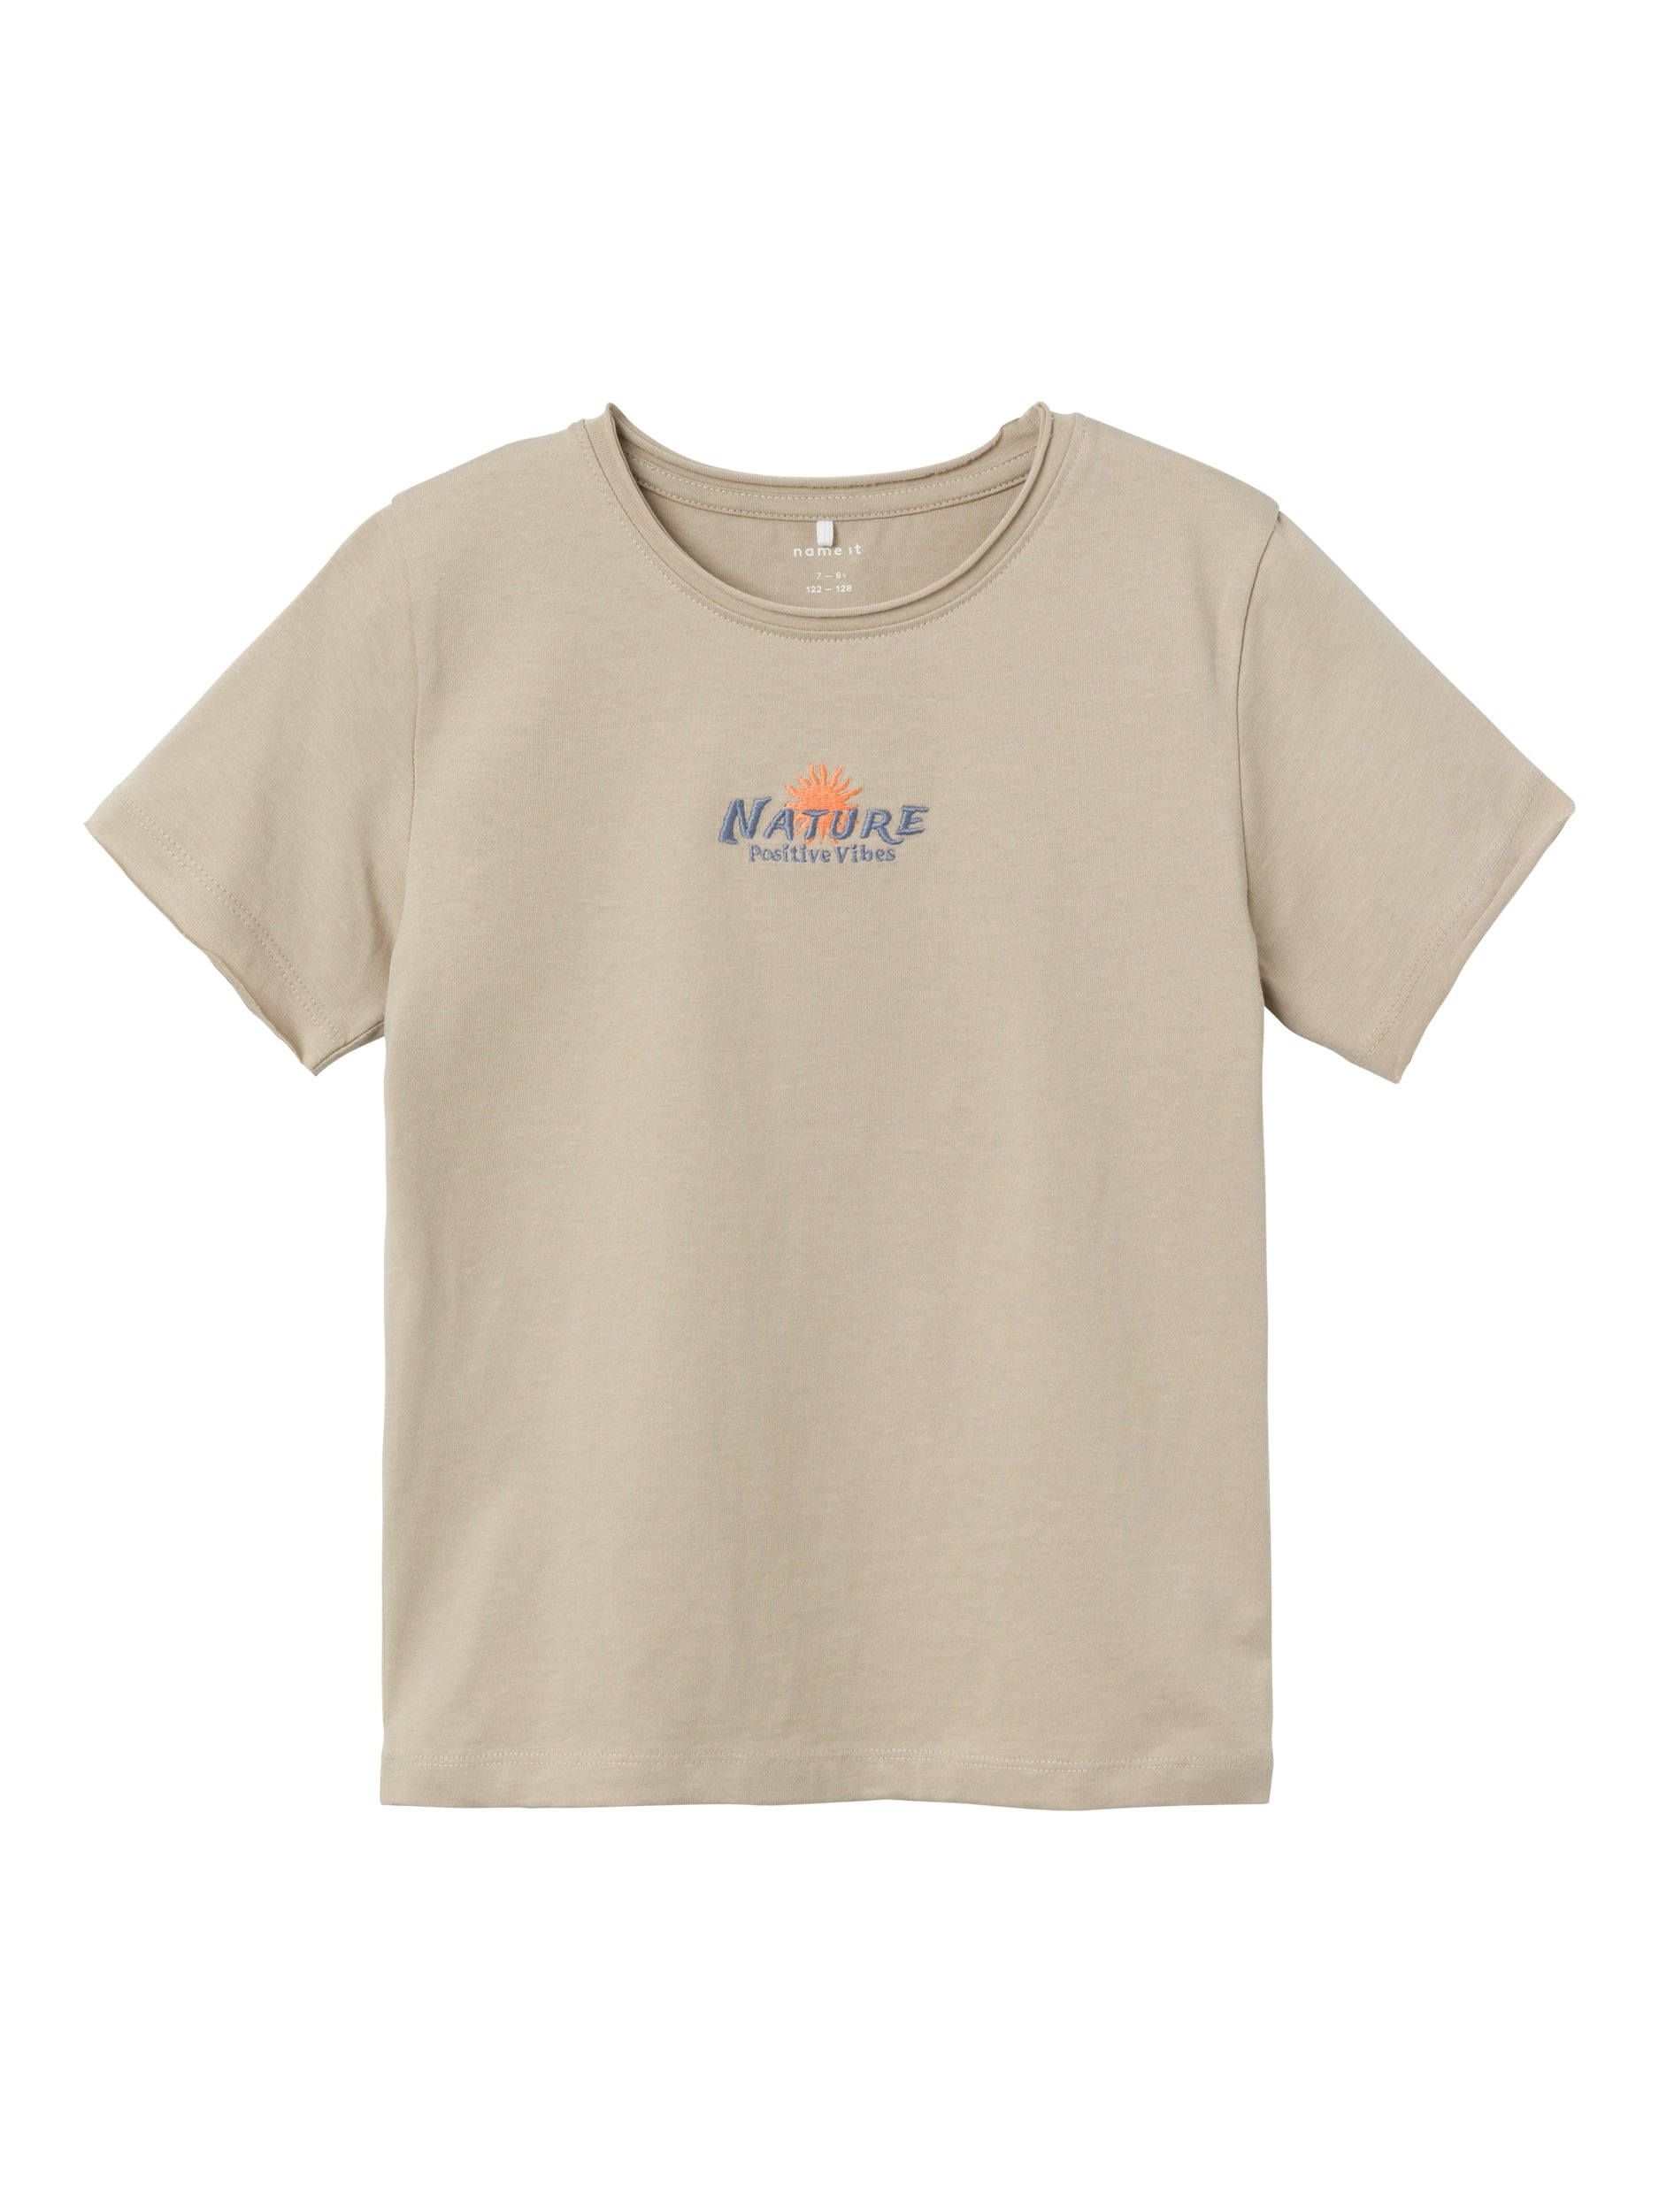 Name It t-shirt kids beige con ricamo Nature